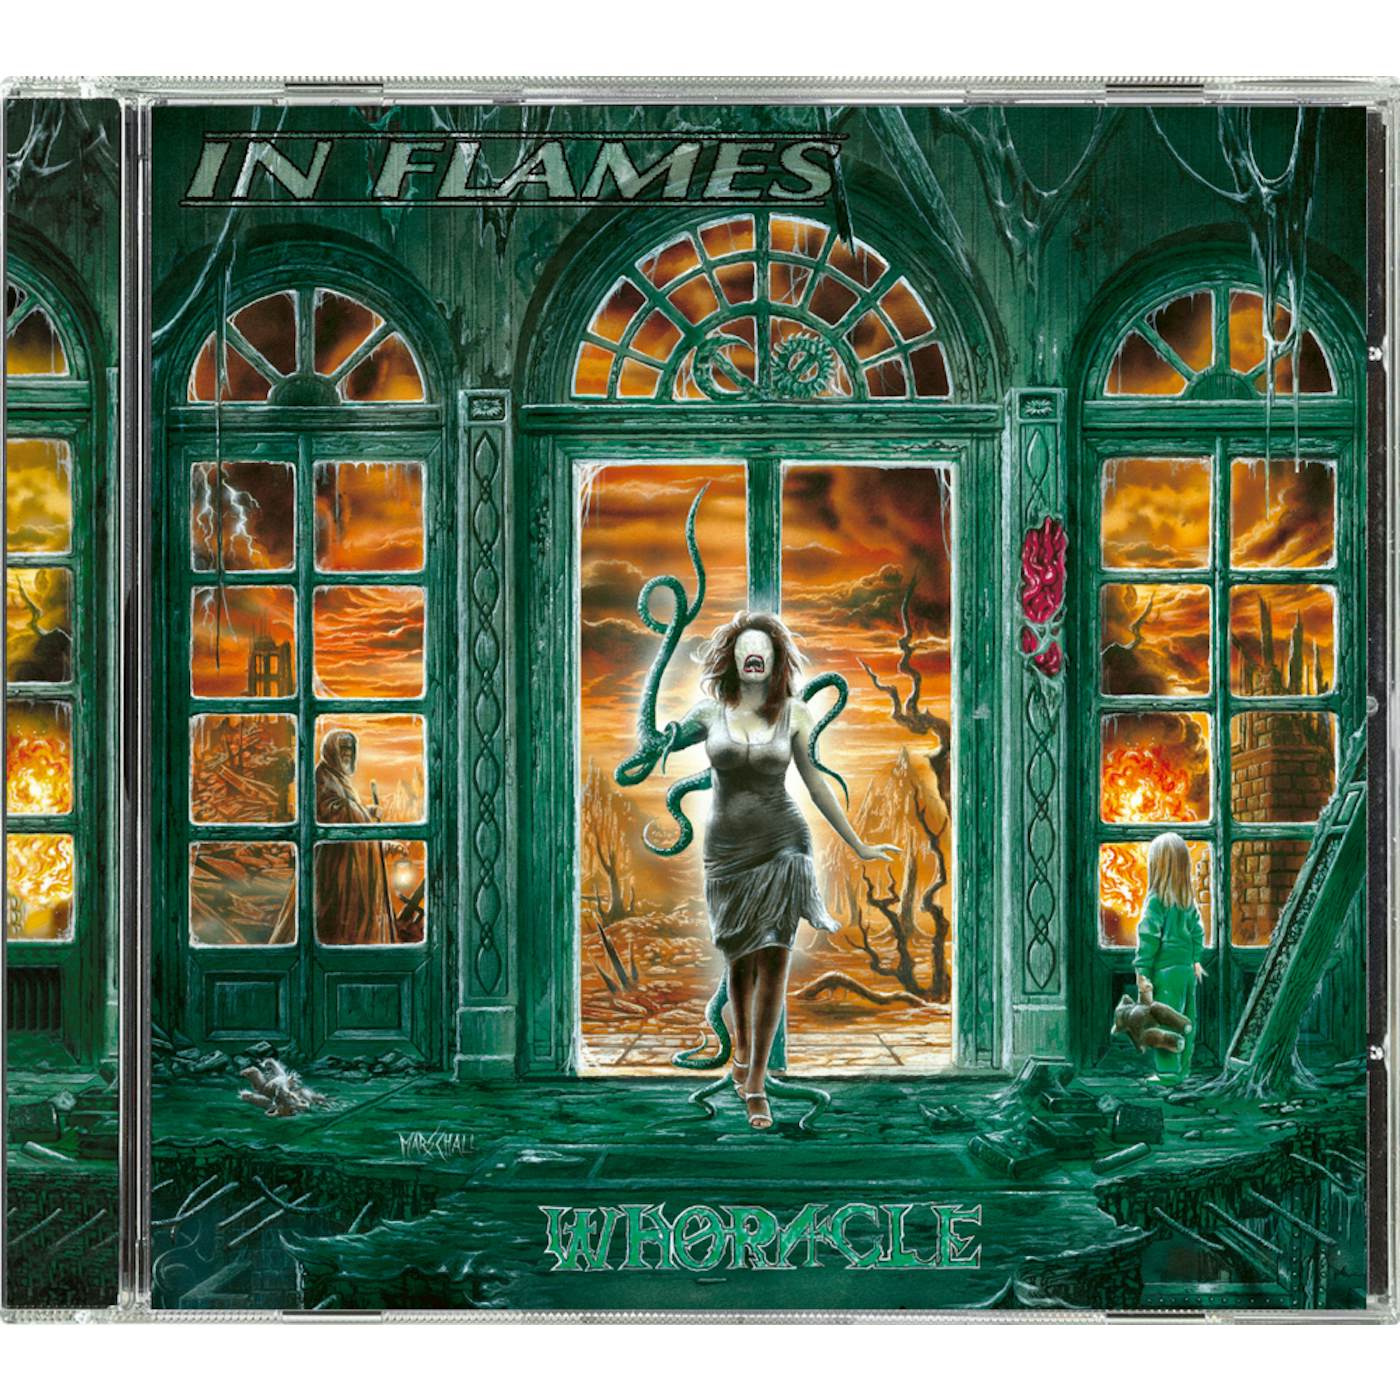 In Flames "Whoracle" CD